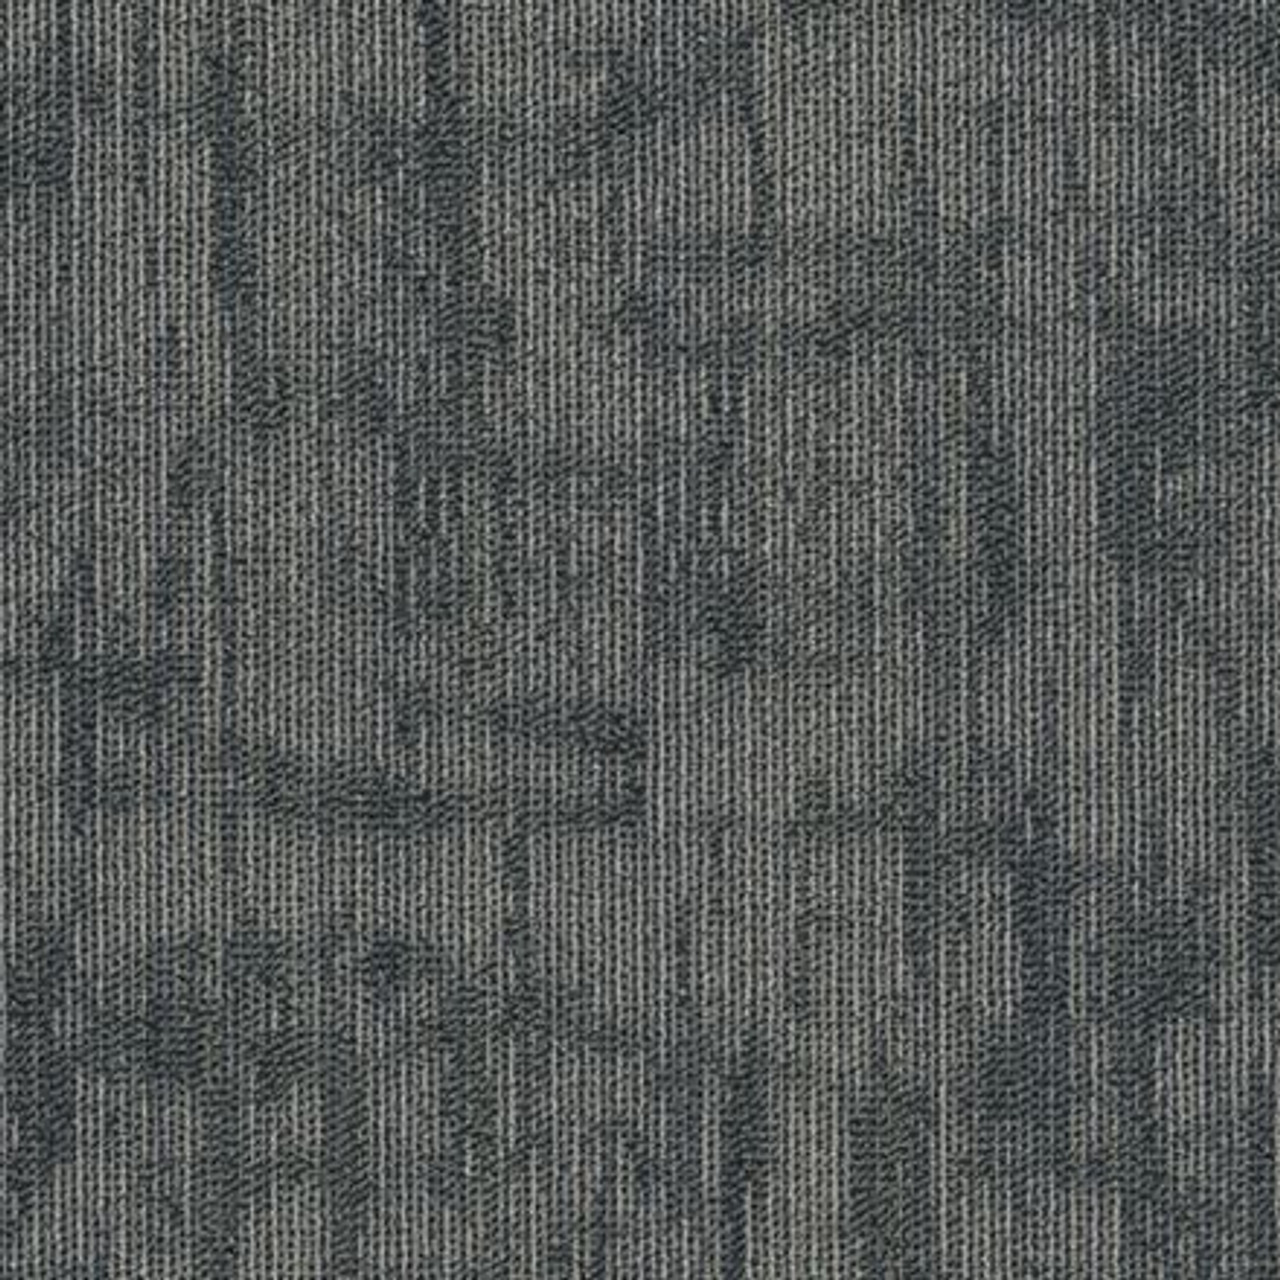 shaw carpet tile